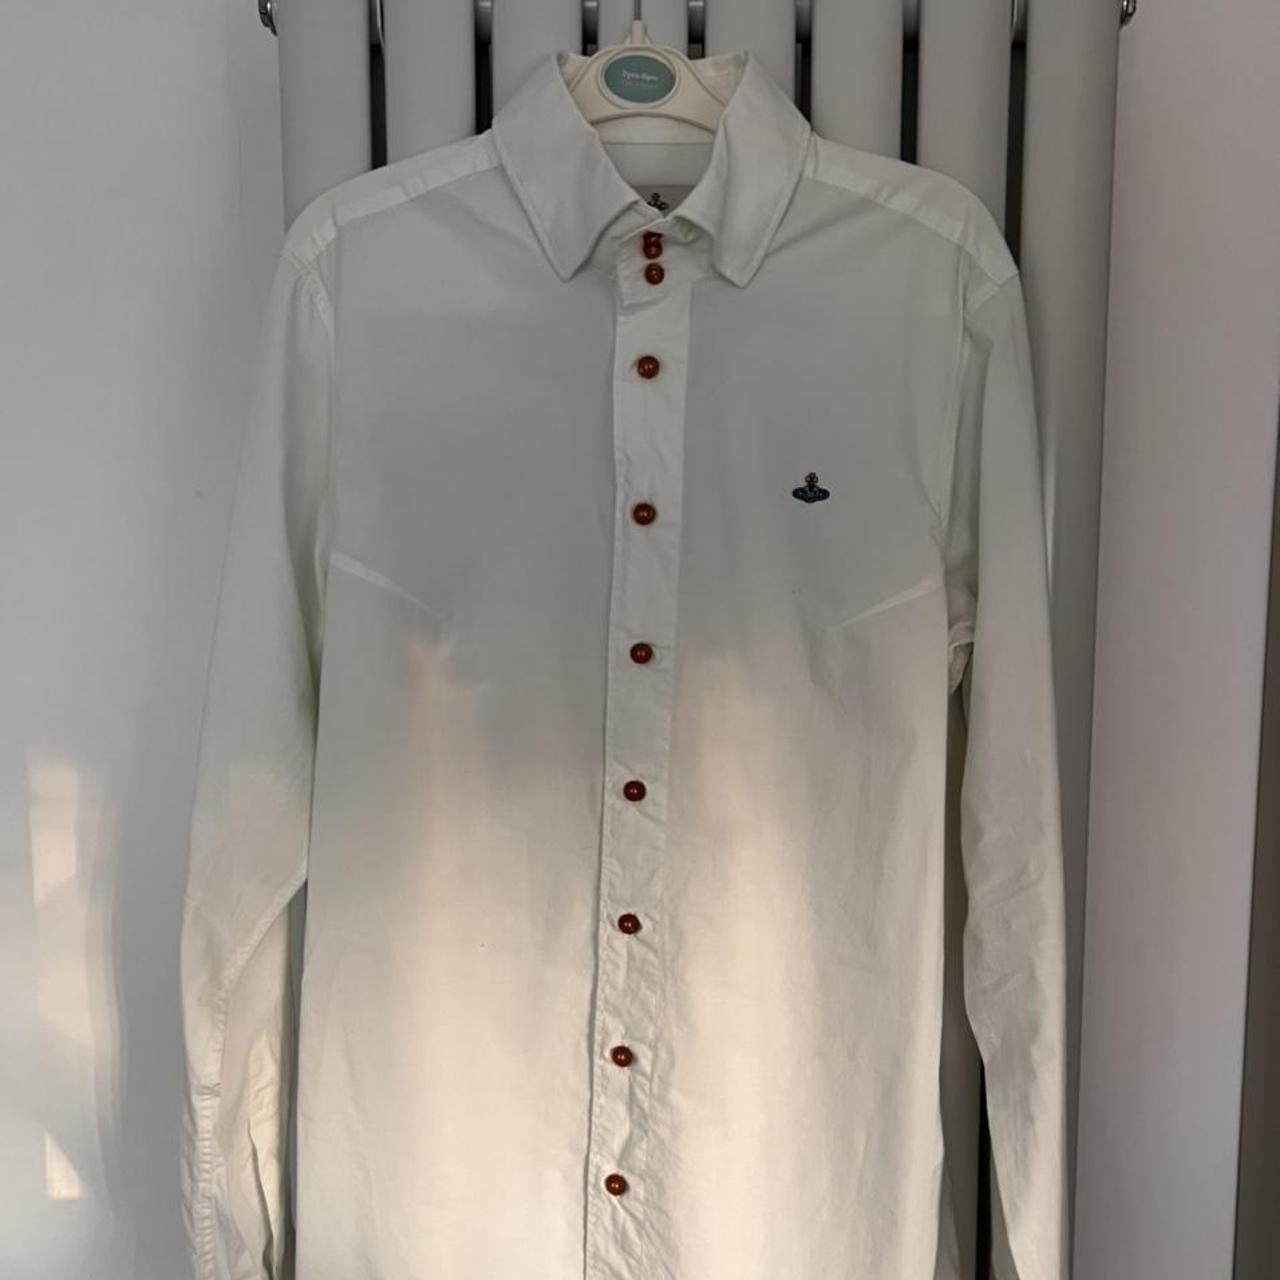 Vivienne Westwood 3 button shirt £250rrp worn twice,... - Depop